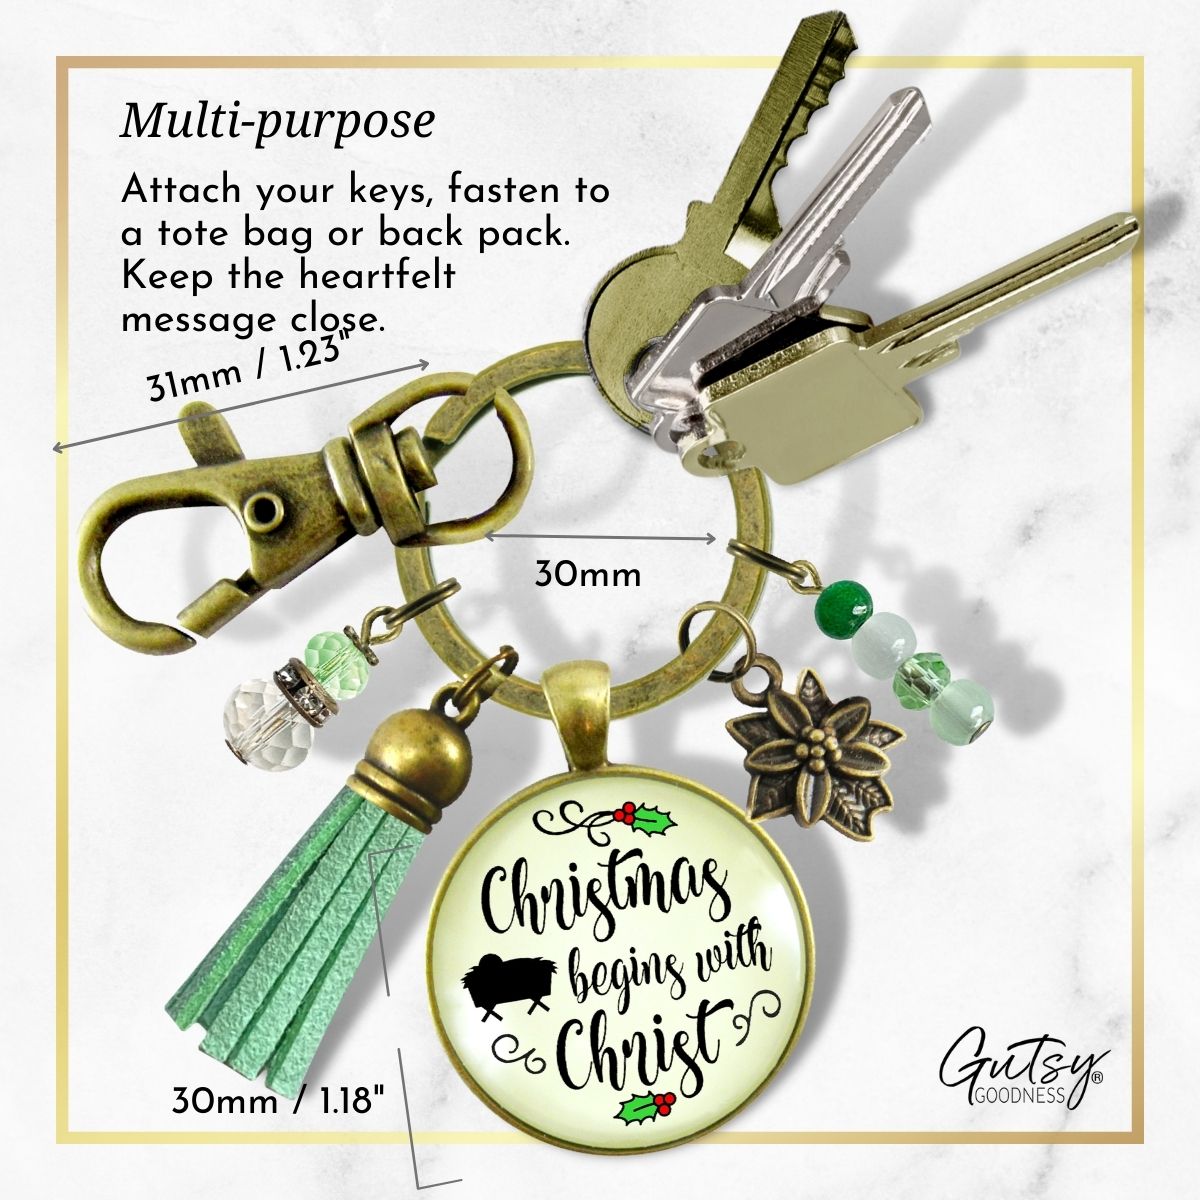 Merry Christmas Keychain Christmas Begins With Christ Faith Jewelry Handmade Candle Charm Gift   - Gutsy Goodness Handmade Jewelry